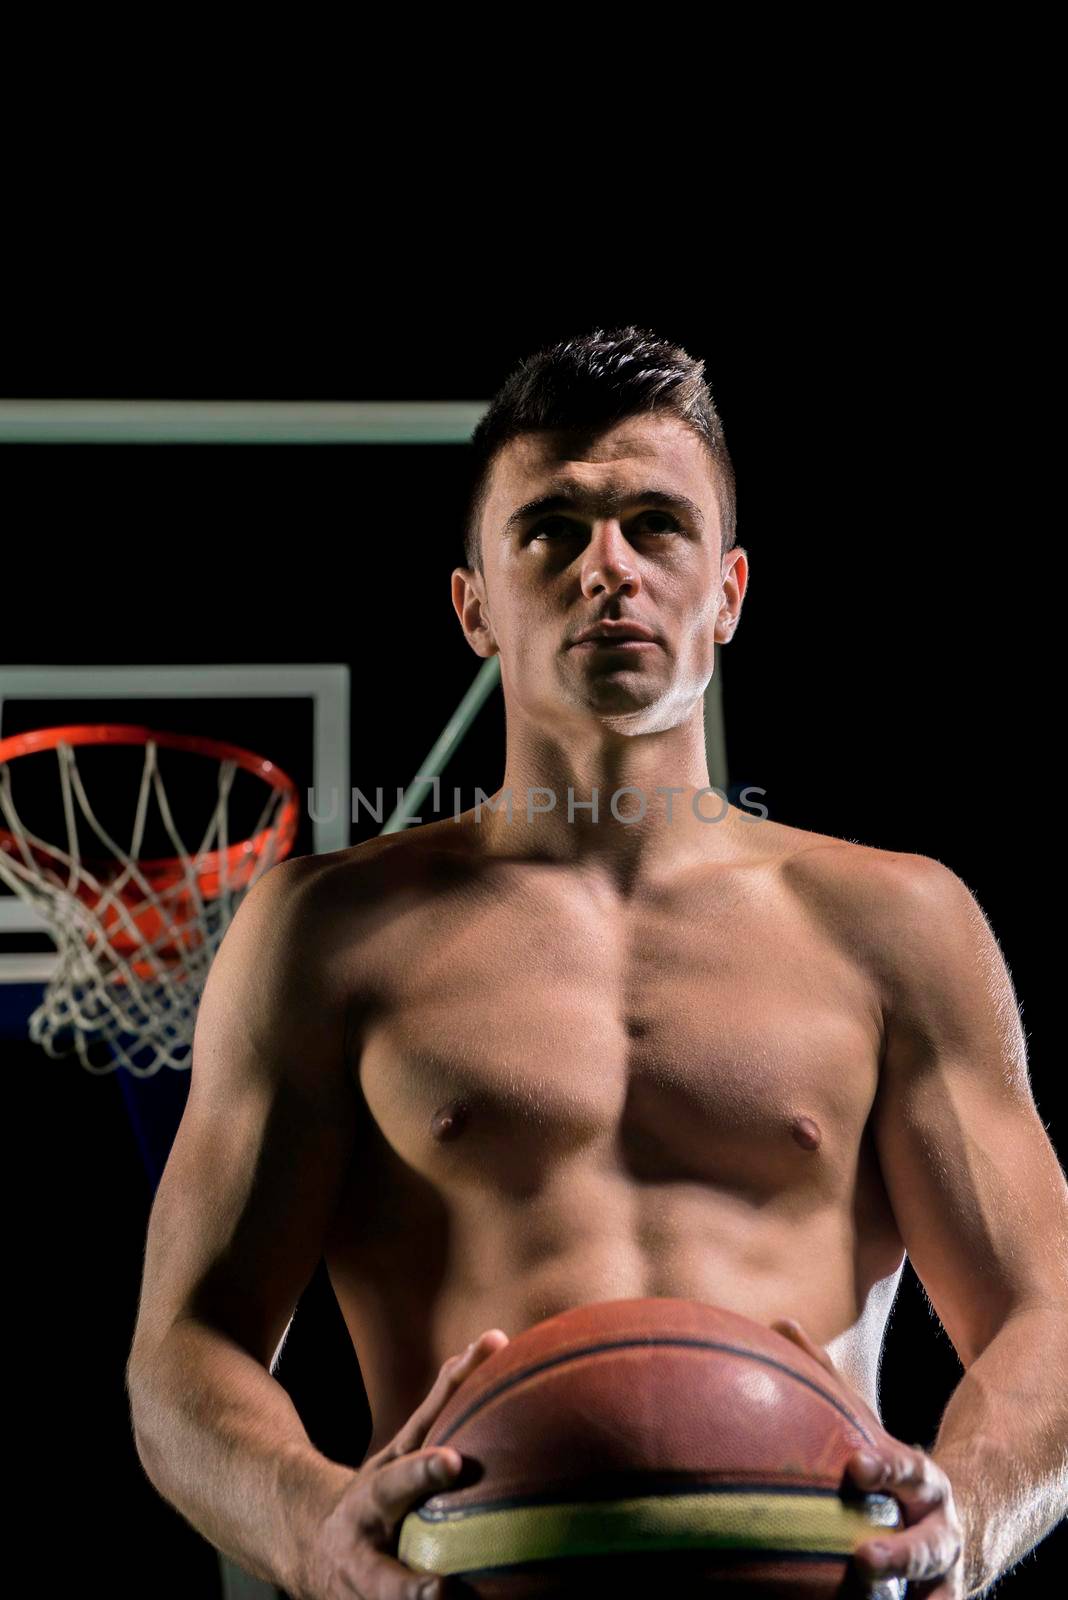 Basketball player portrait by dotshock